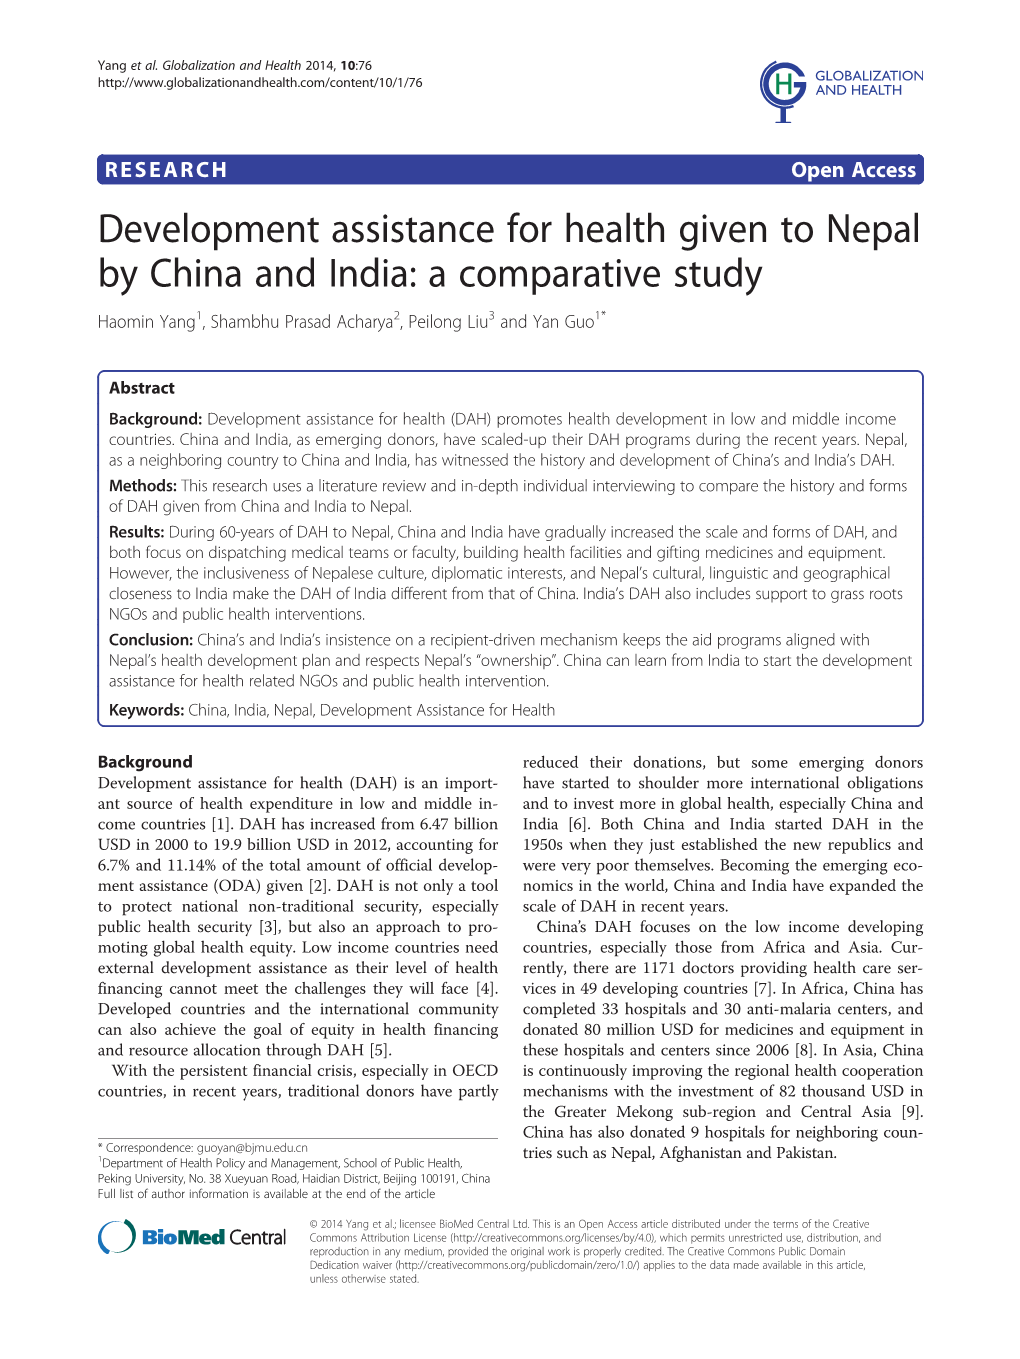 Development Assistance for Health Given to Nepal by China and India: a Comparative Study Haomin Yang1, Shambhu Prasad Acharya2, Peilong Liu3 and Yan Guo1*